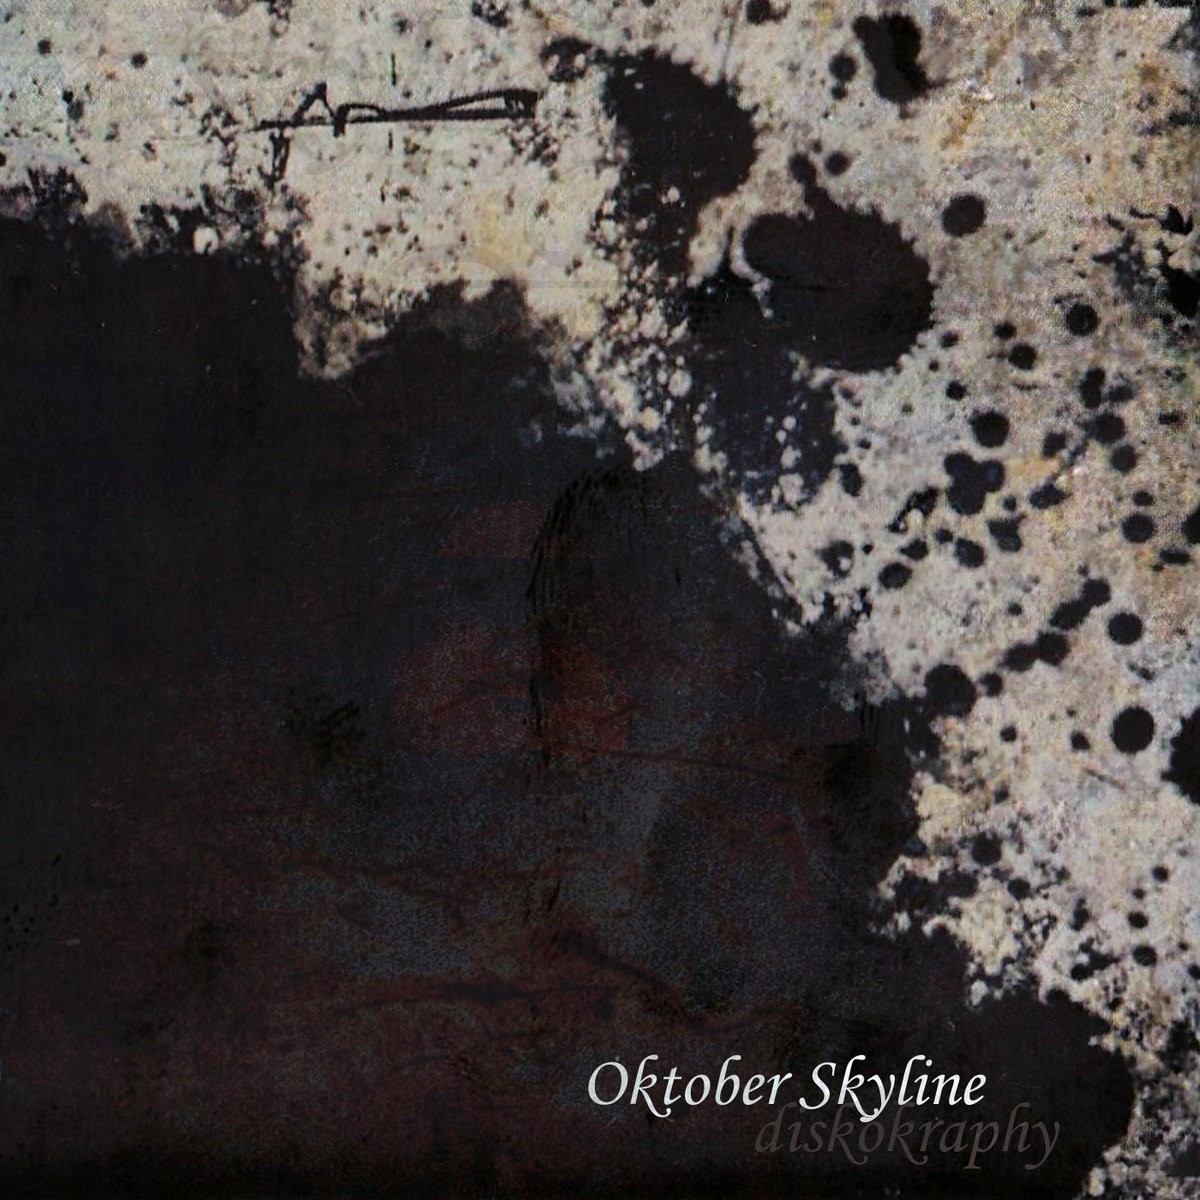 Oktober Skyline - Diskokraphy (2020) Cover